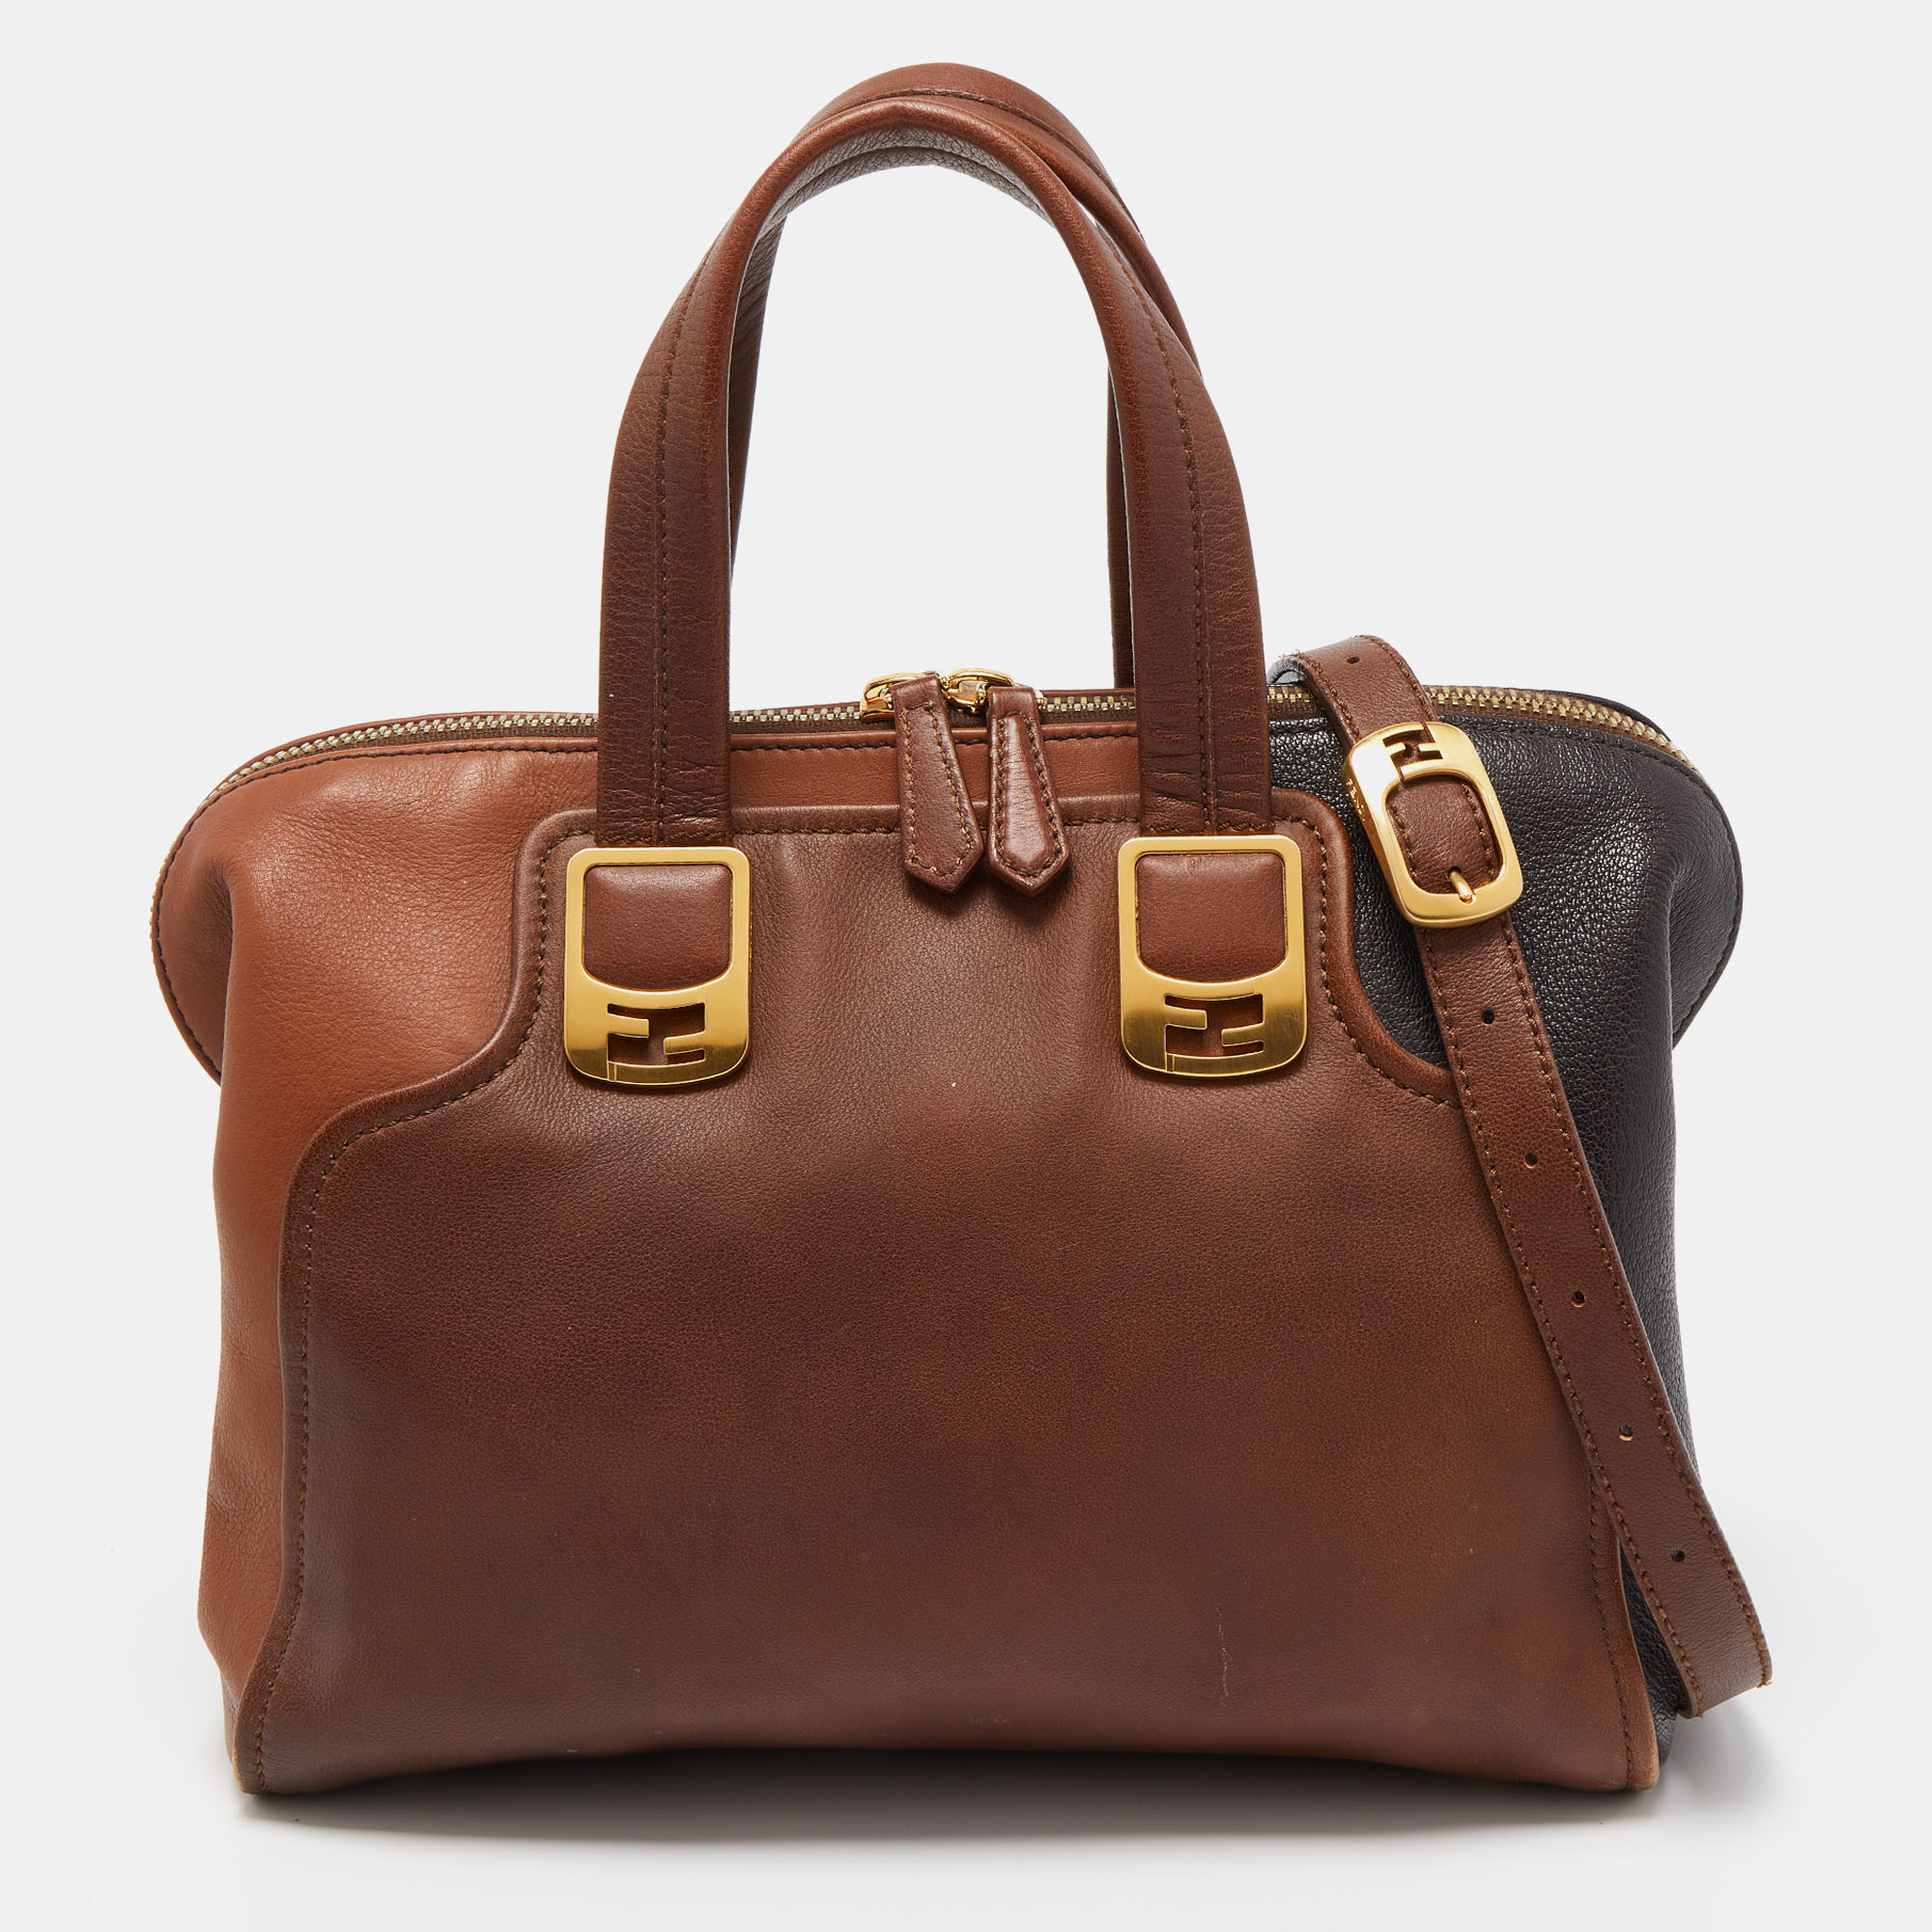 Fendi two tone brown leather chameleon satchel